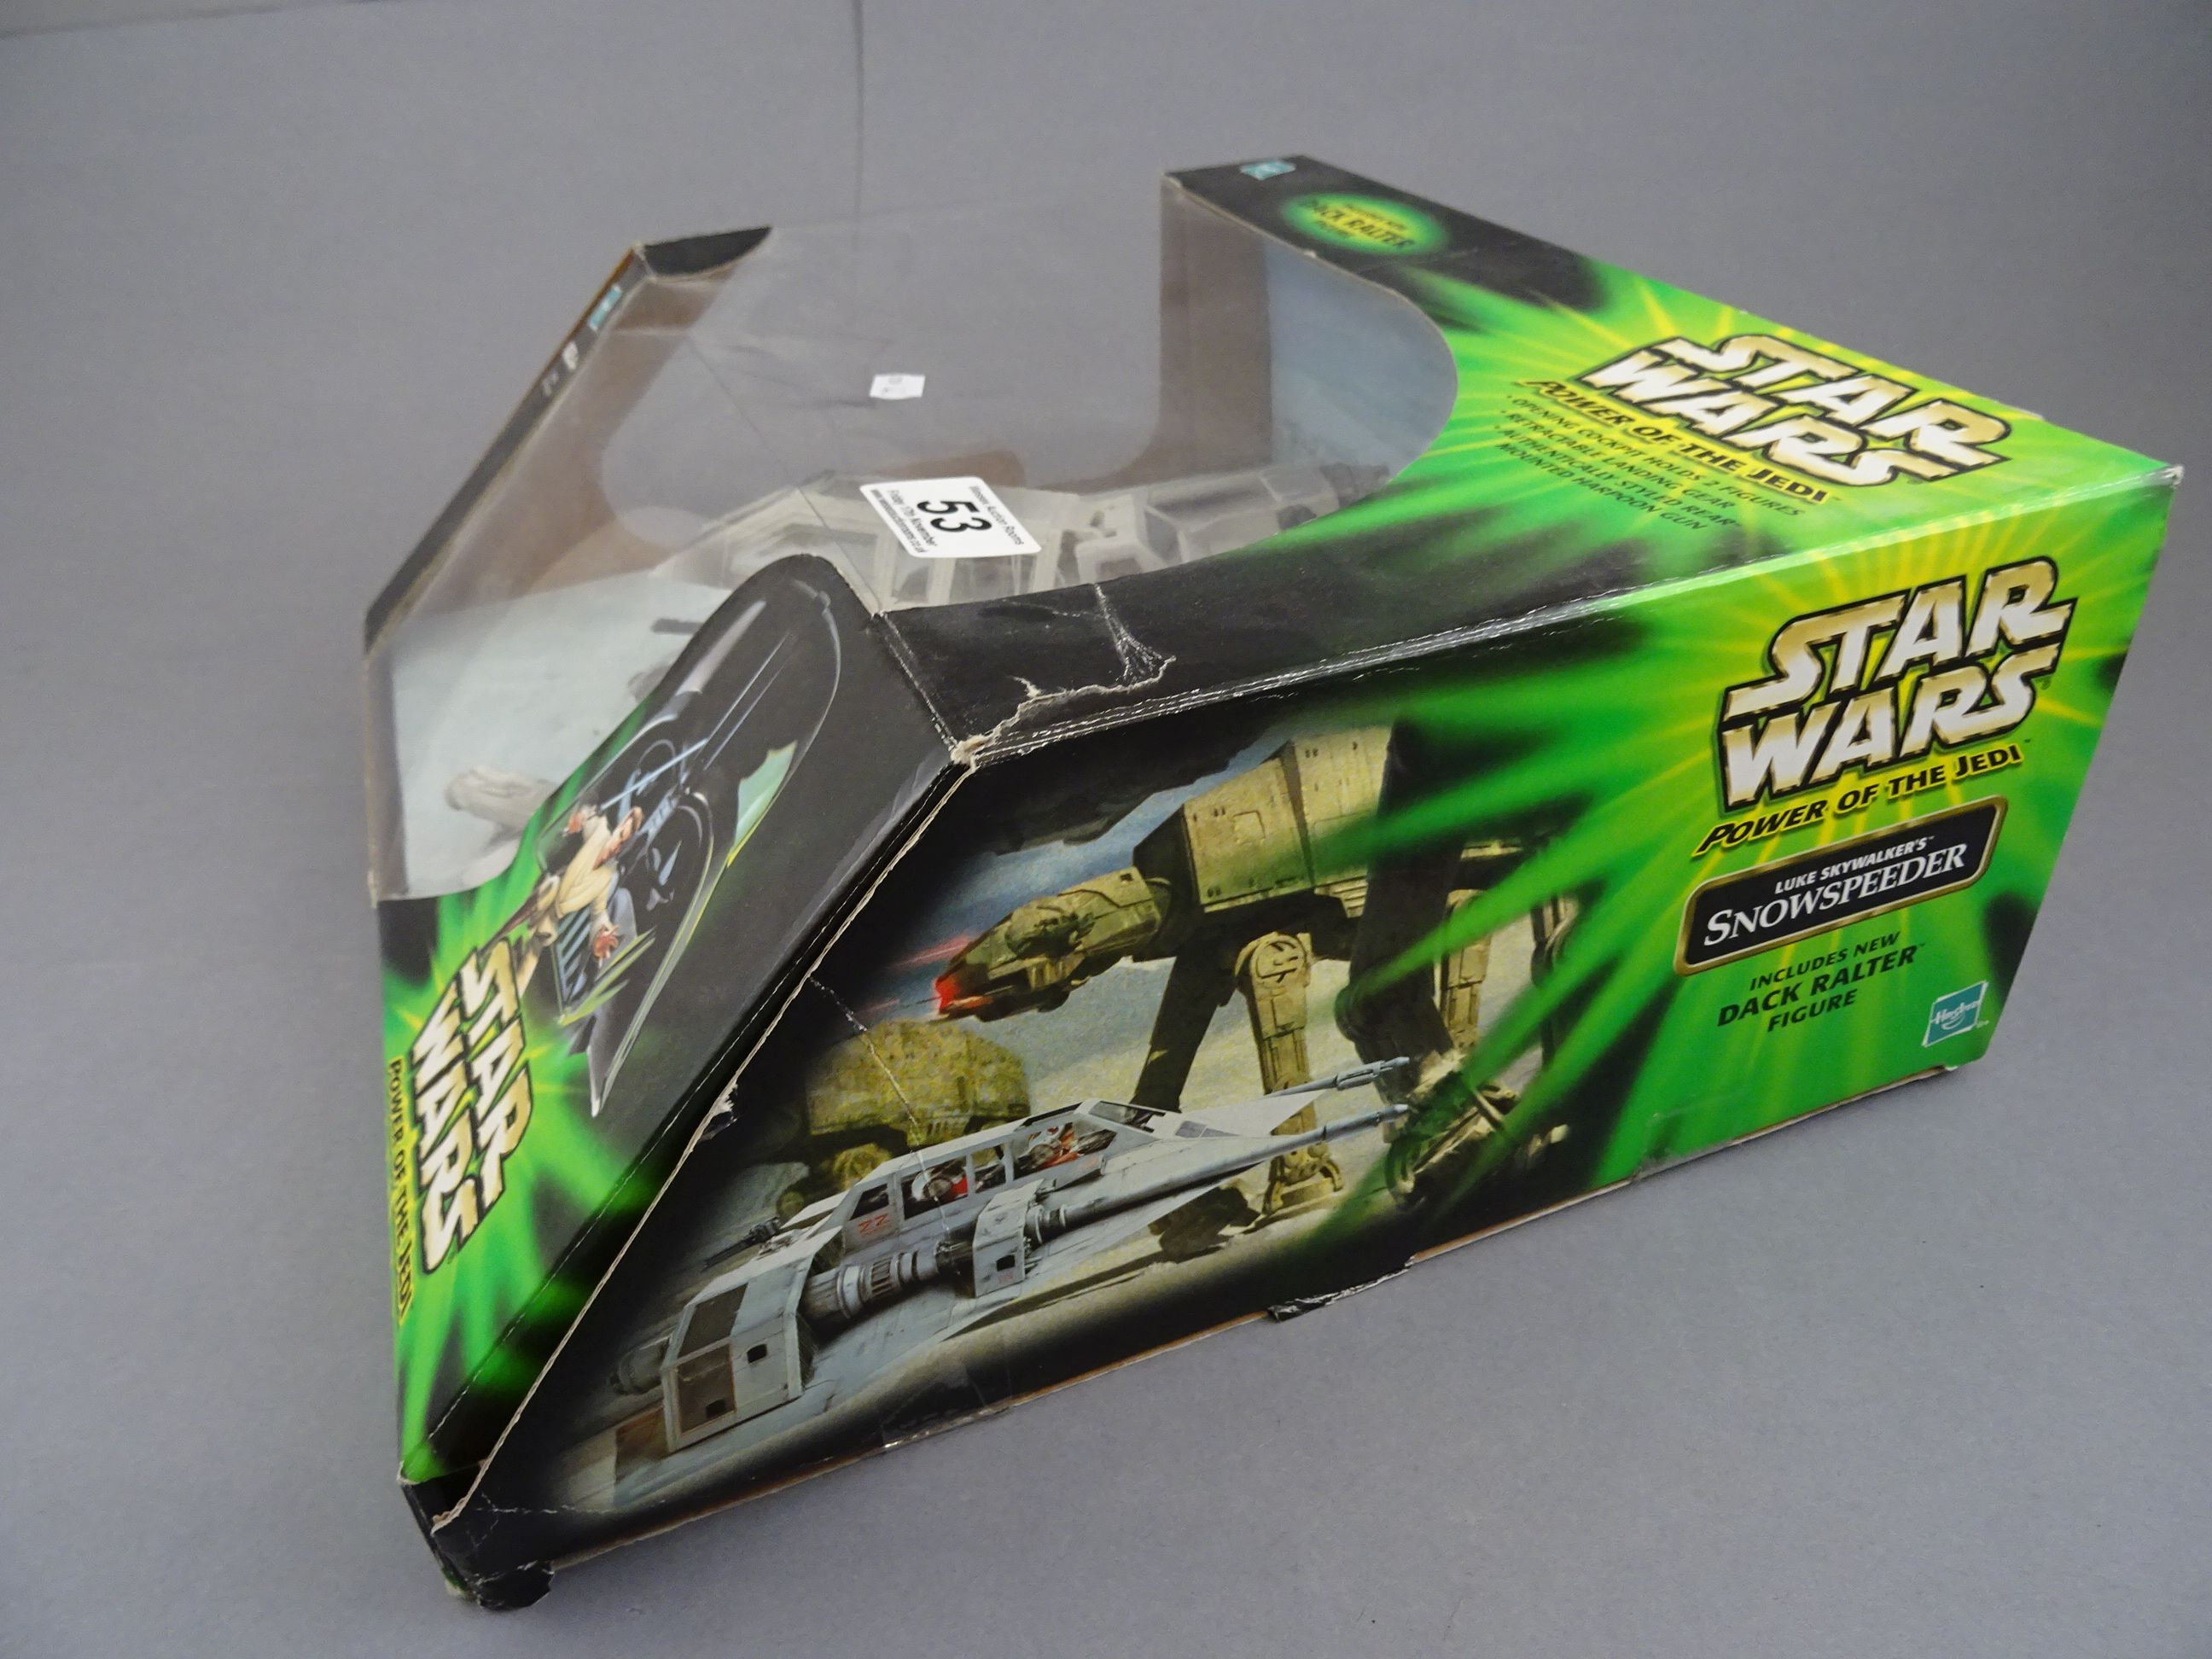 Star Wars - Boxed Hasbro Power of the Jedi Luke Skywalker's Snowspeeder unopened, some wear to box - Image 3 of 5